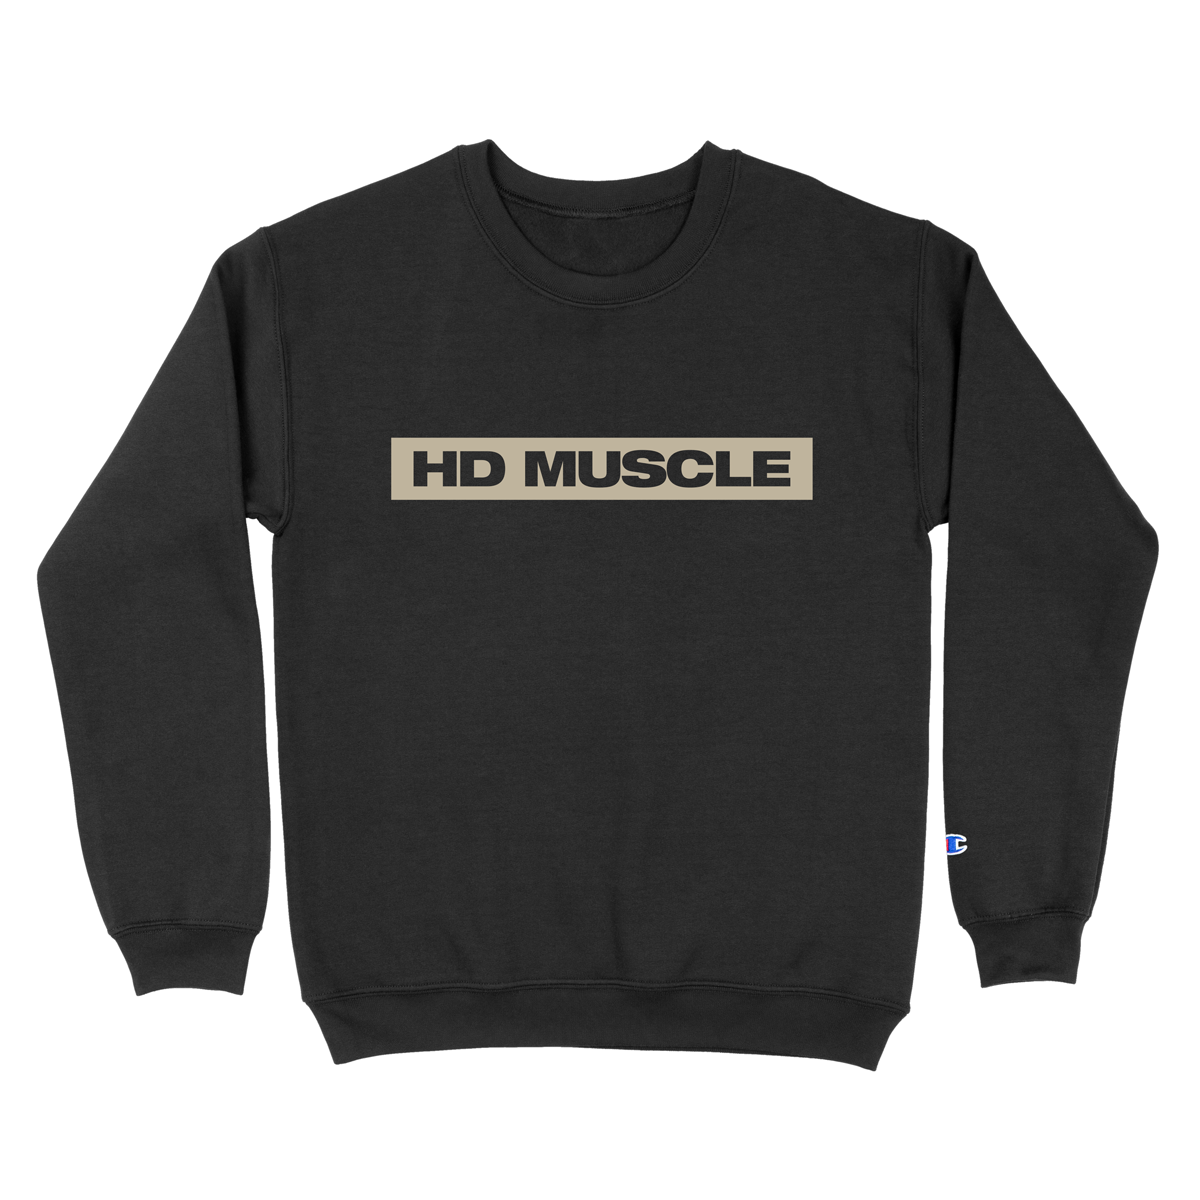 Gym Bro Tank - HD MUSCLE